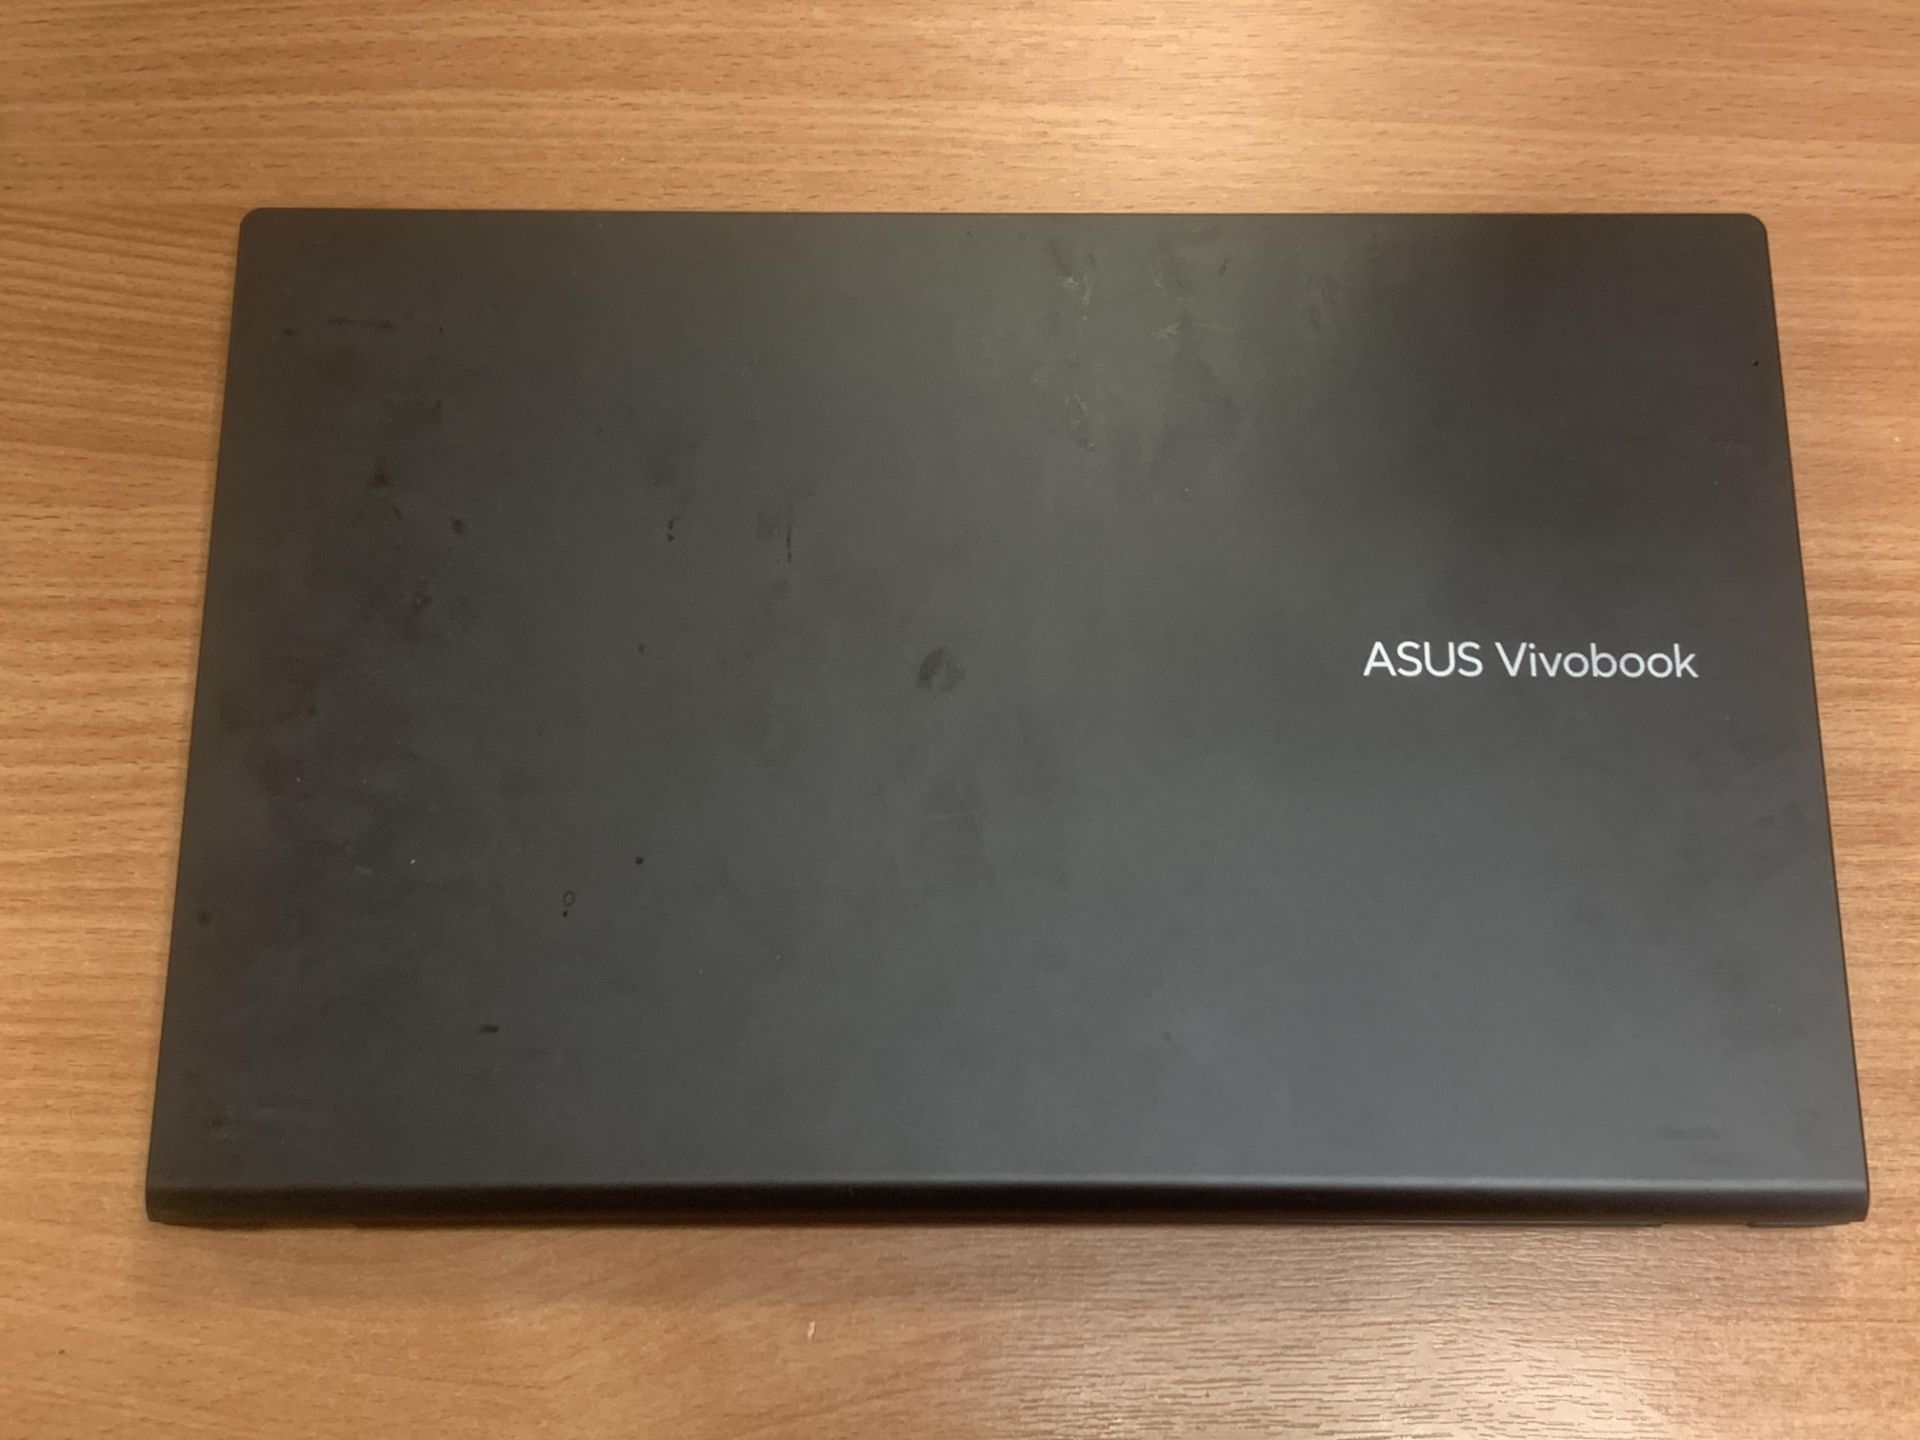 Asus Vivobook Laptop - Image 2 of 5